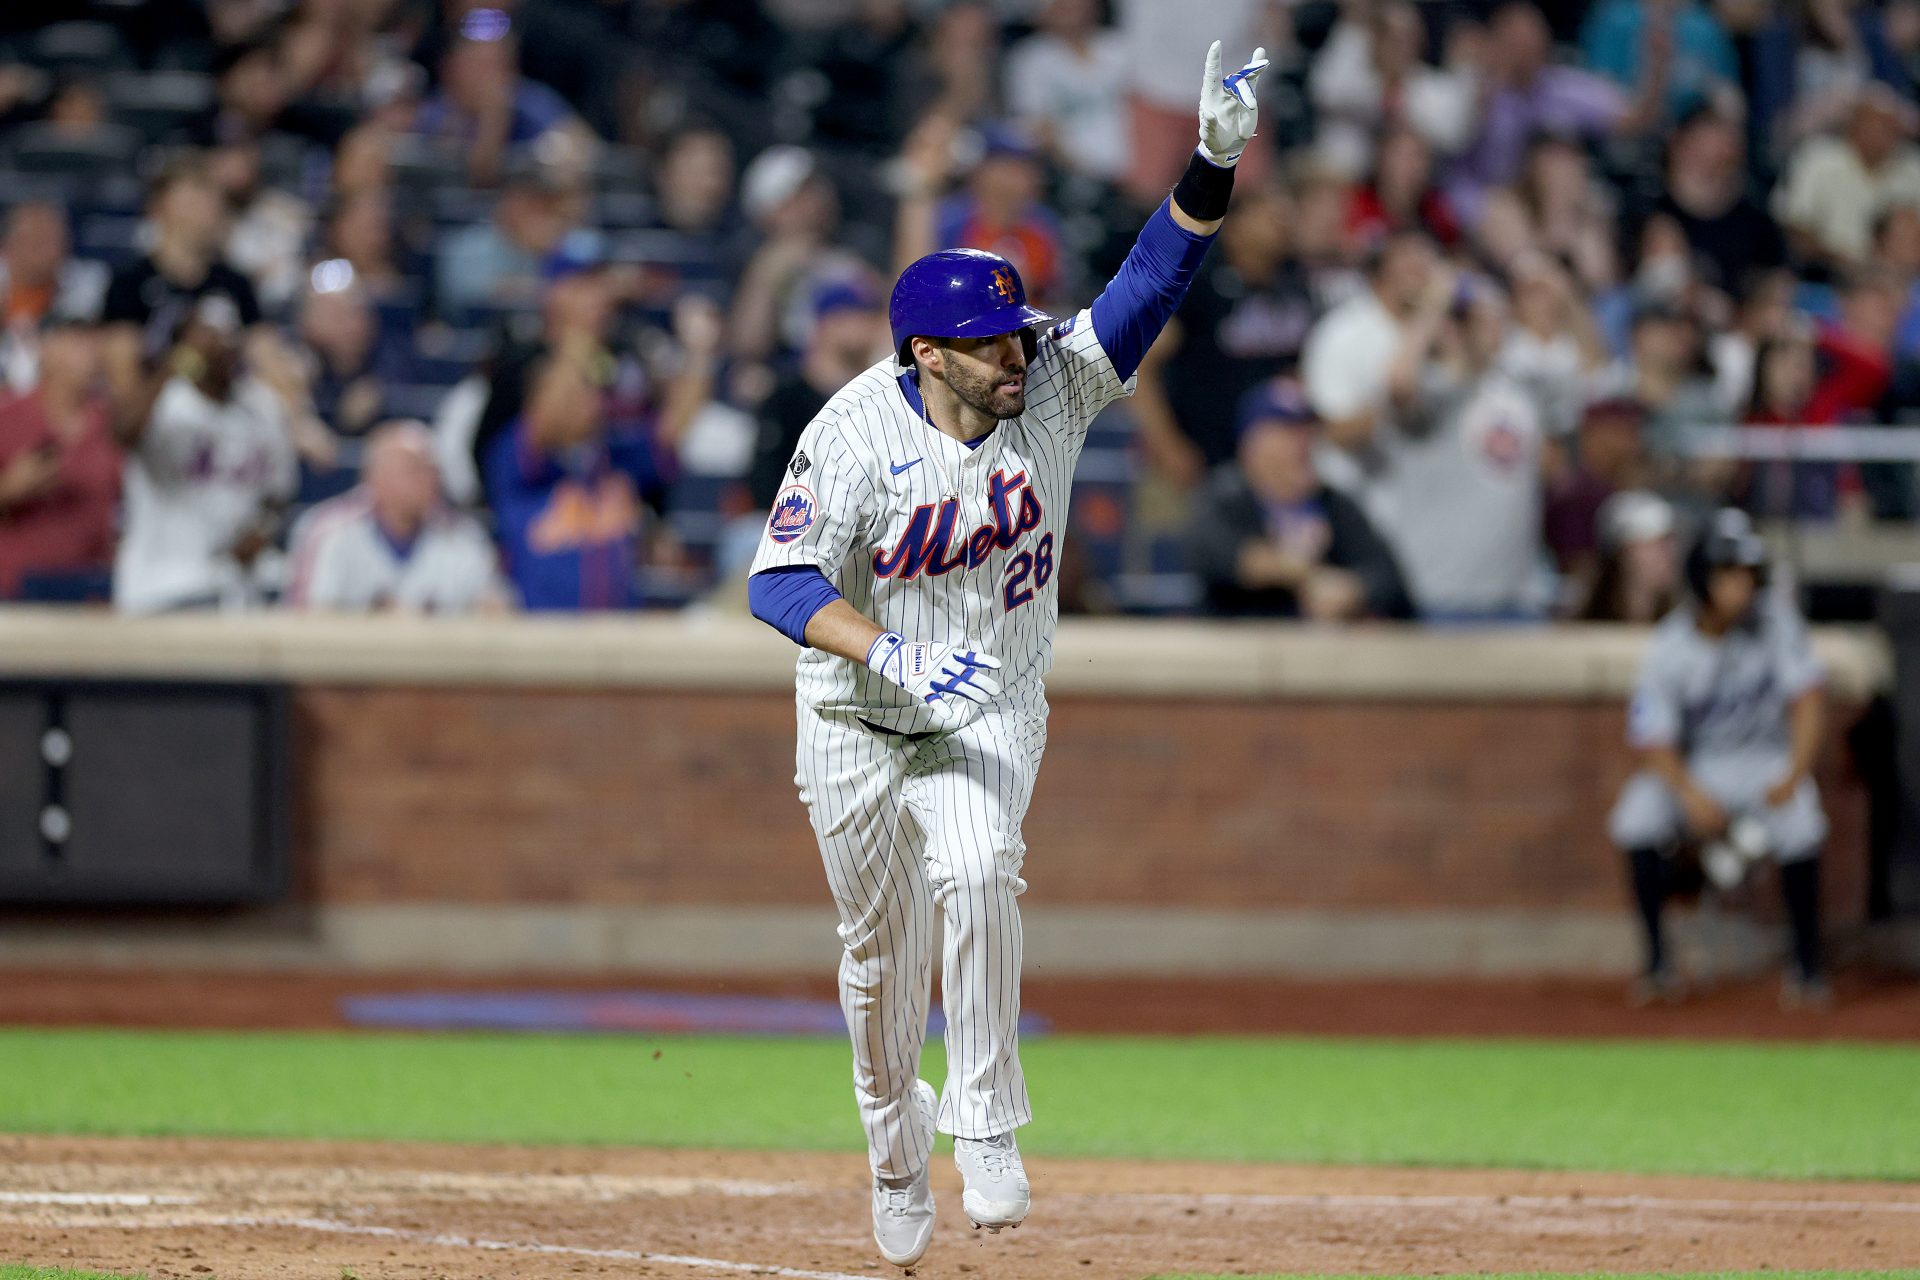 5. J.D. Martinez, New York Mets